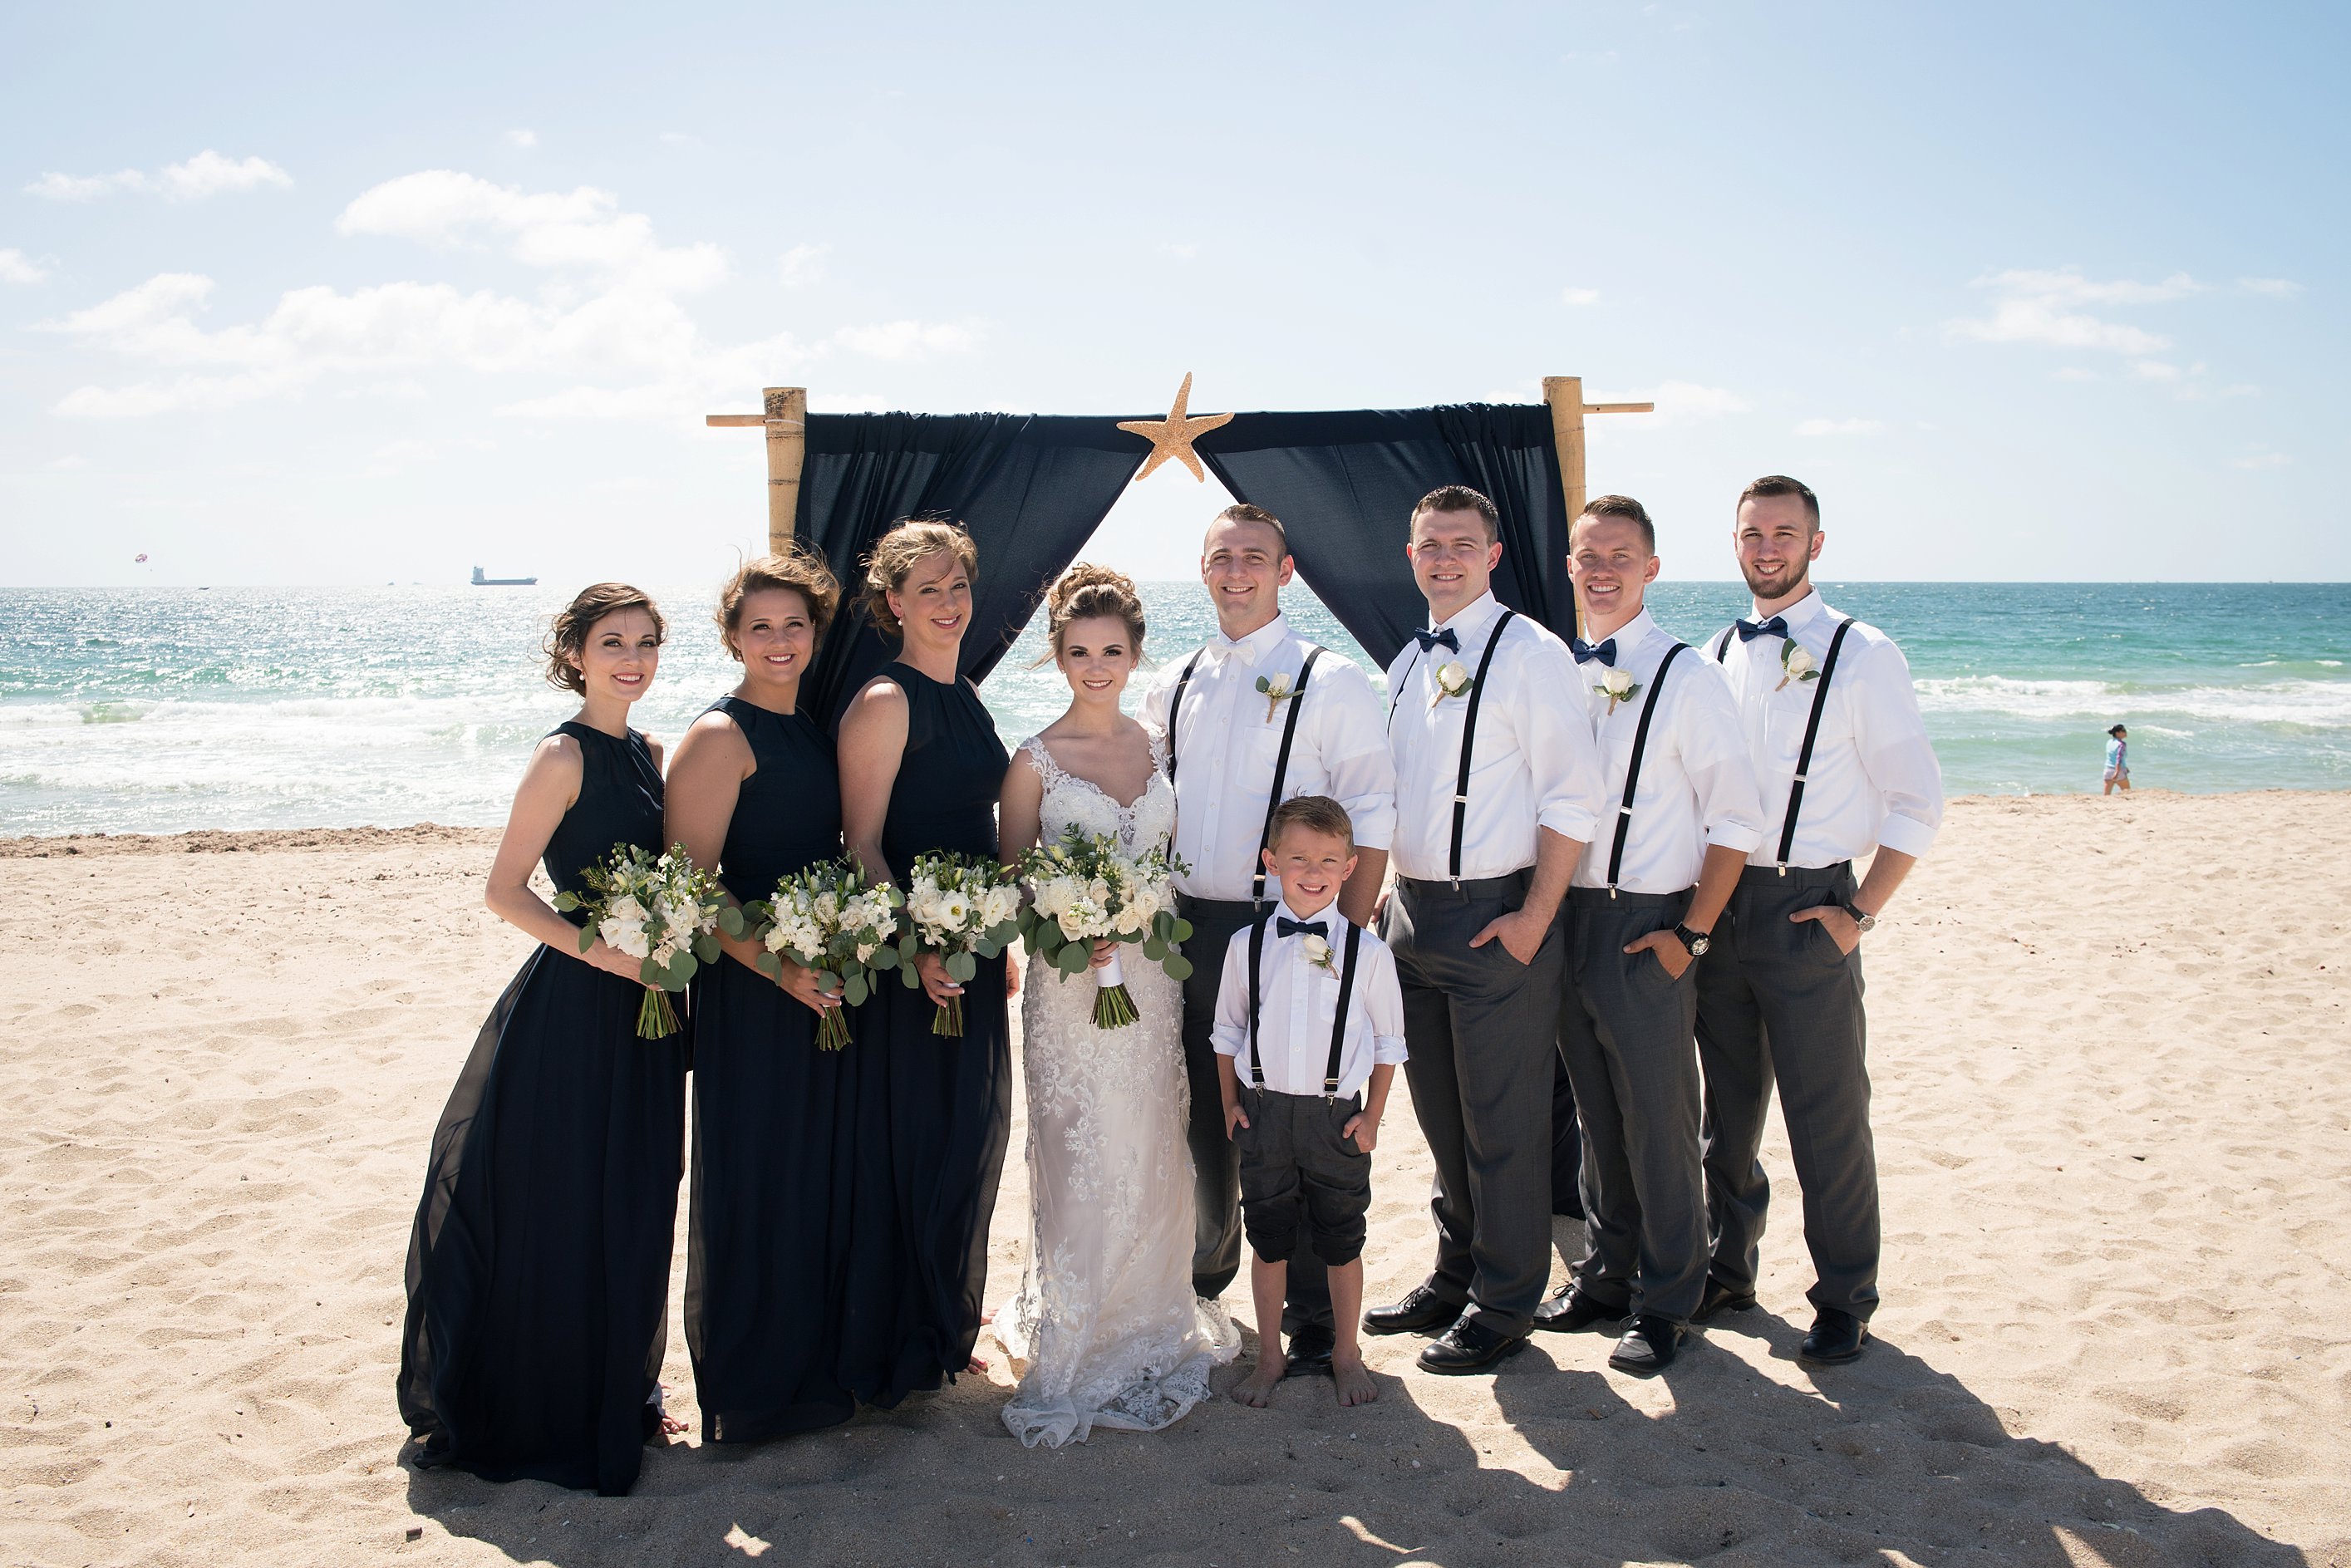 Beach wedding party photo